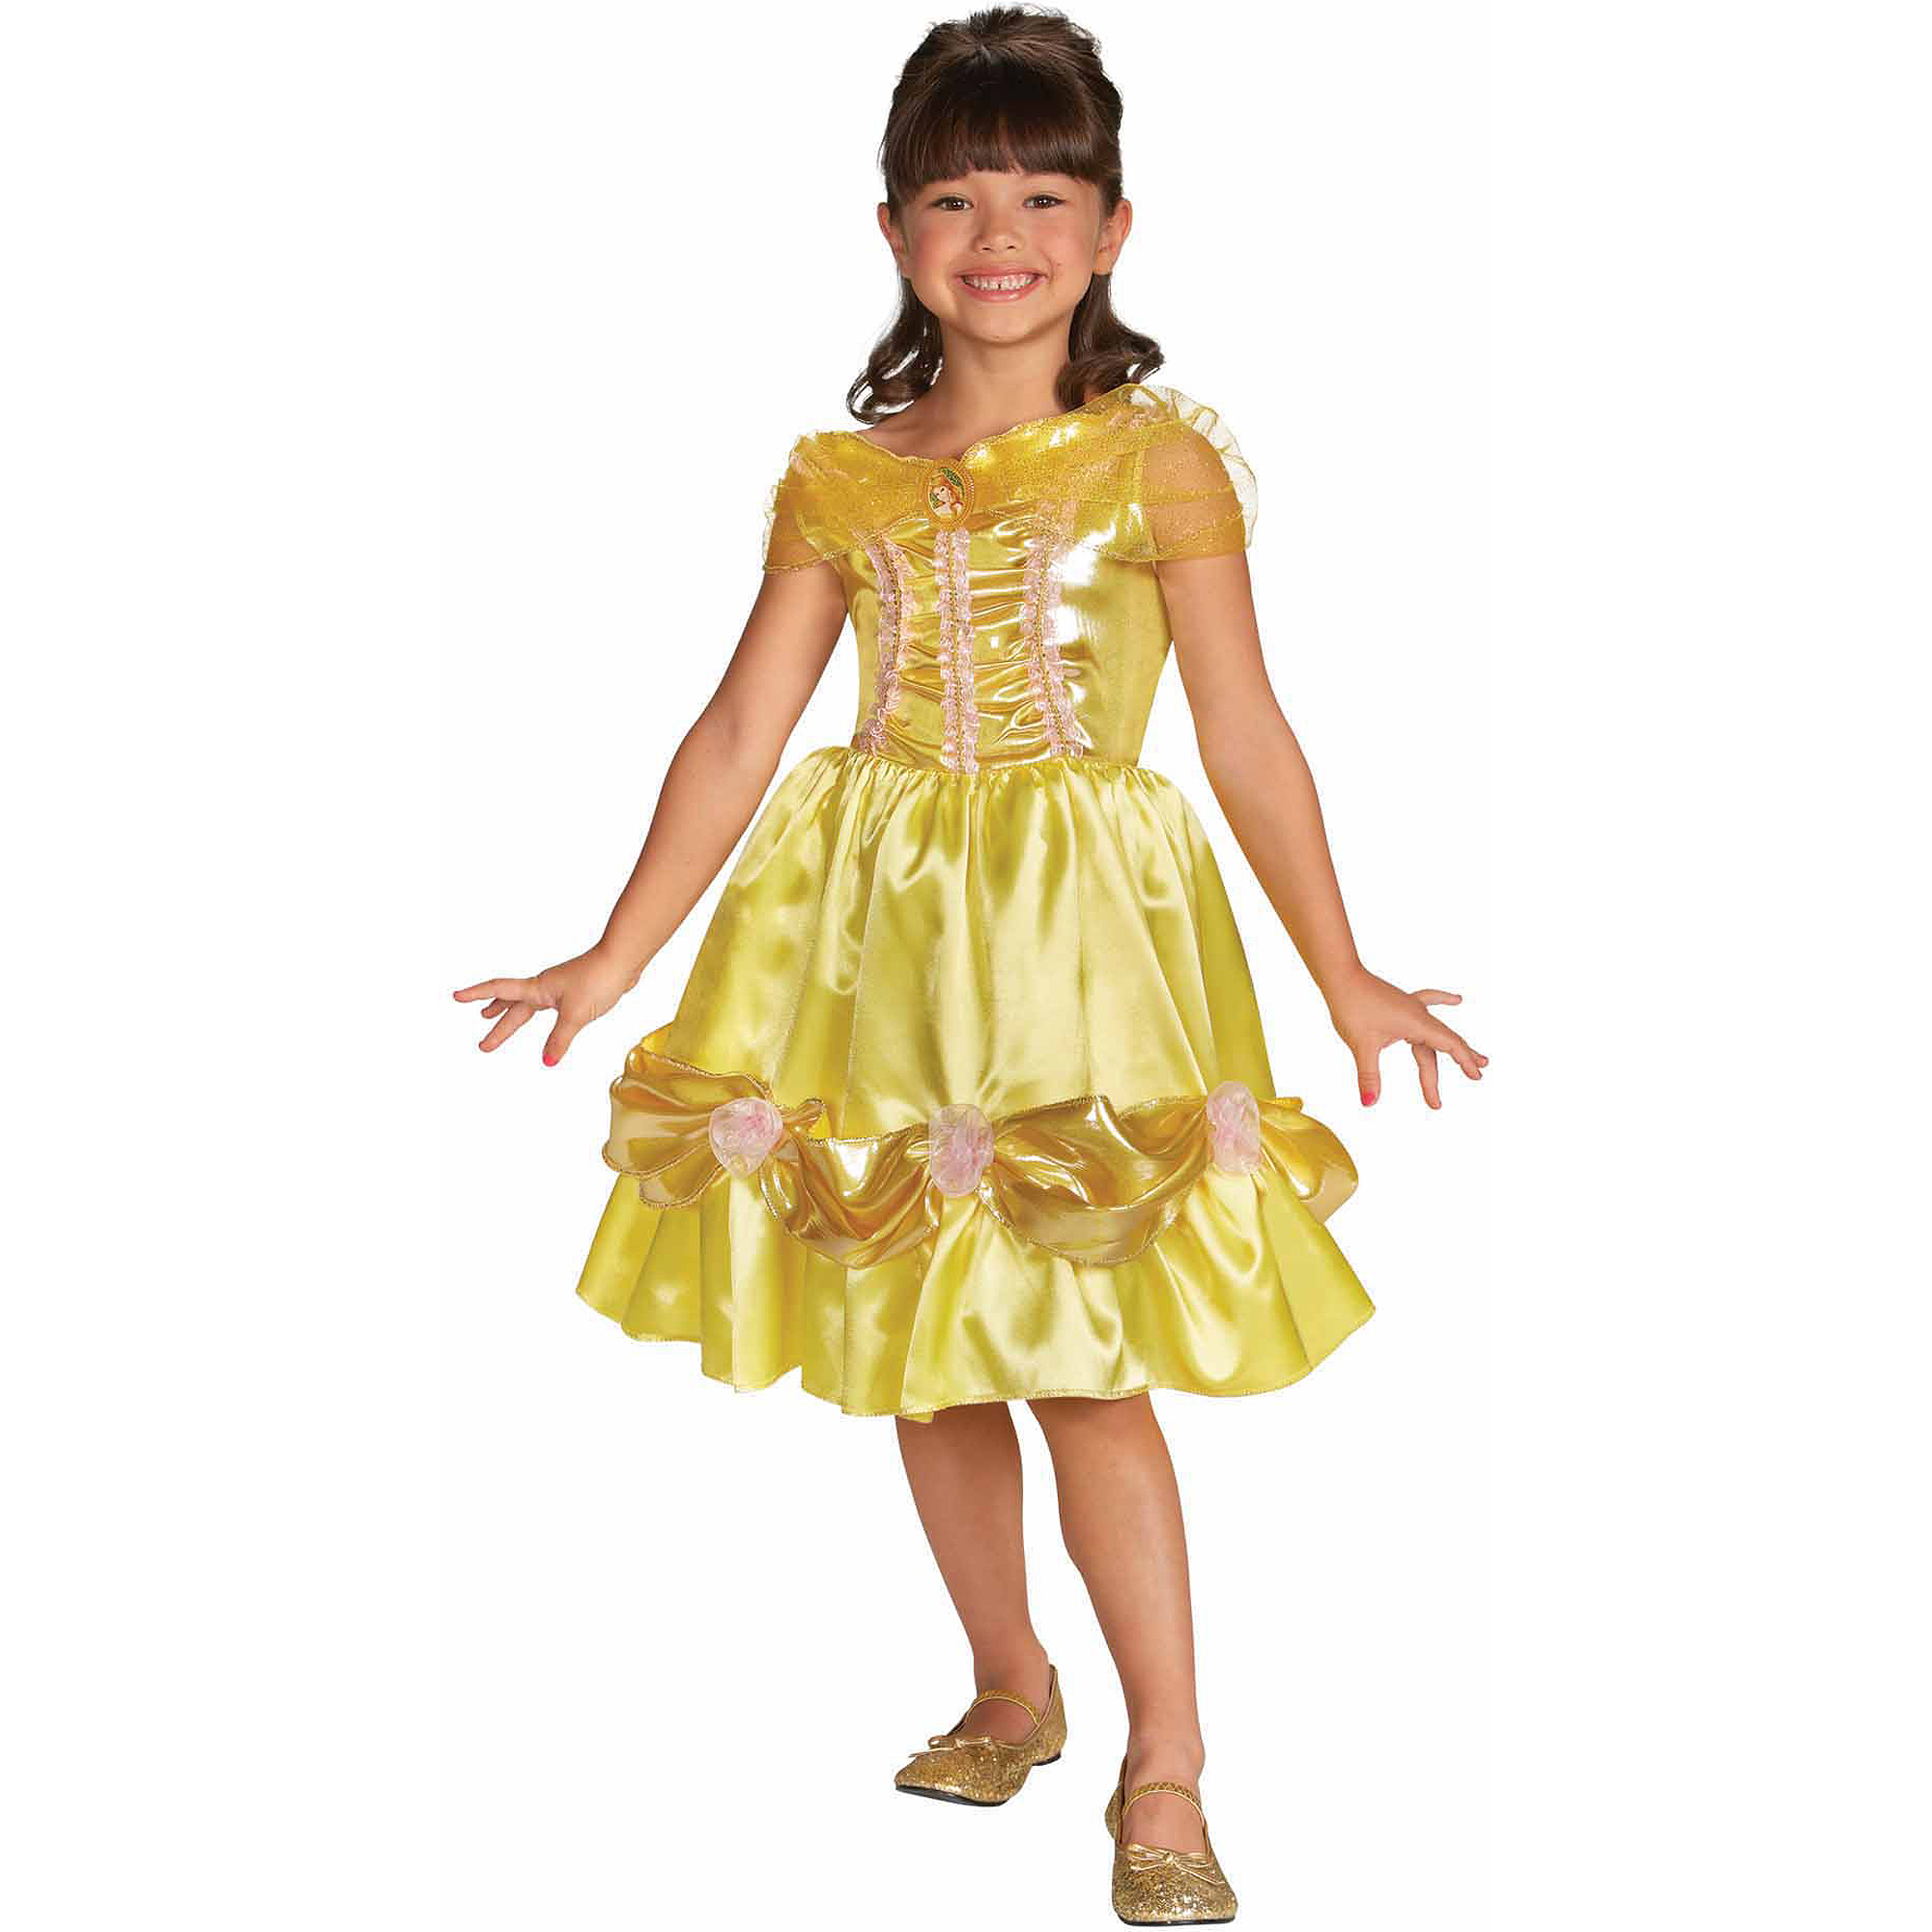 Belle Sparkle Child Halloween Costume - image 1 of 1